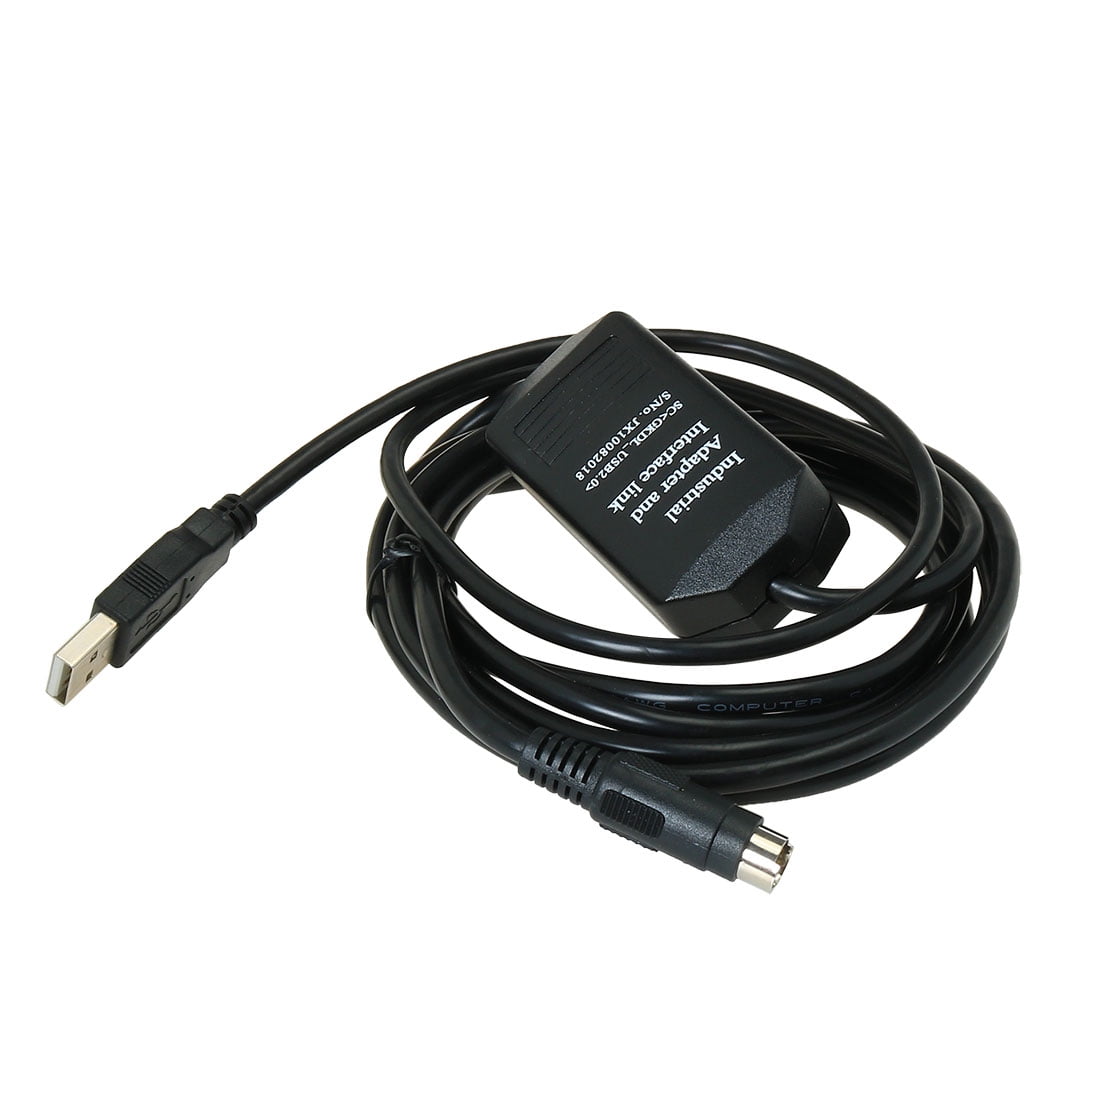 USB-1761-CBL-PM02 USB PLC Cable for AB Programming MicroLonix 1000 Series PLC 